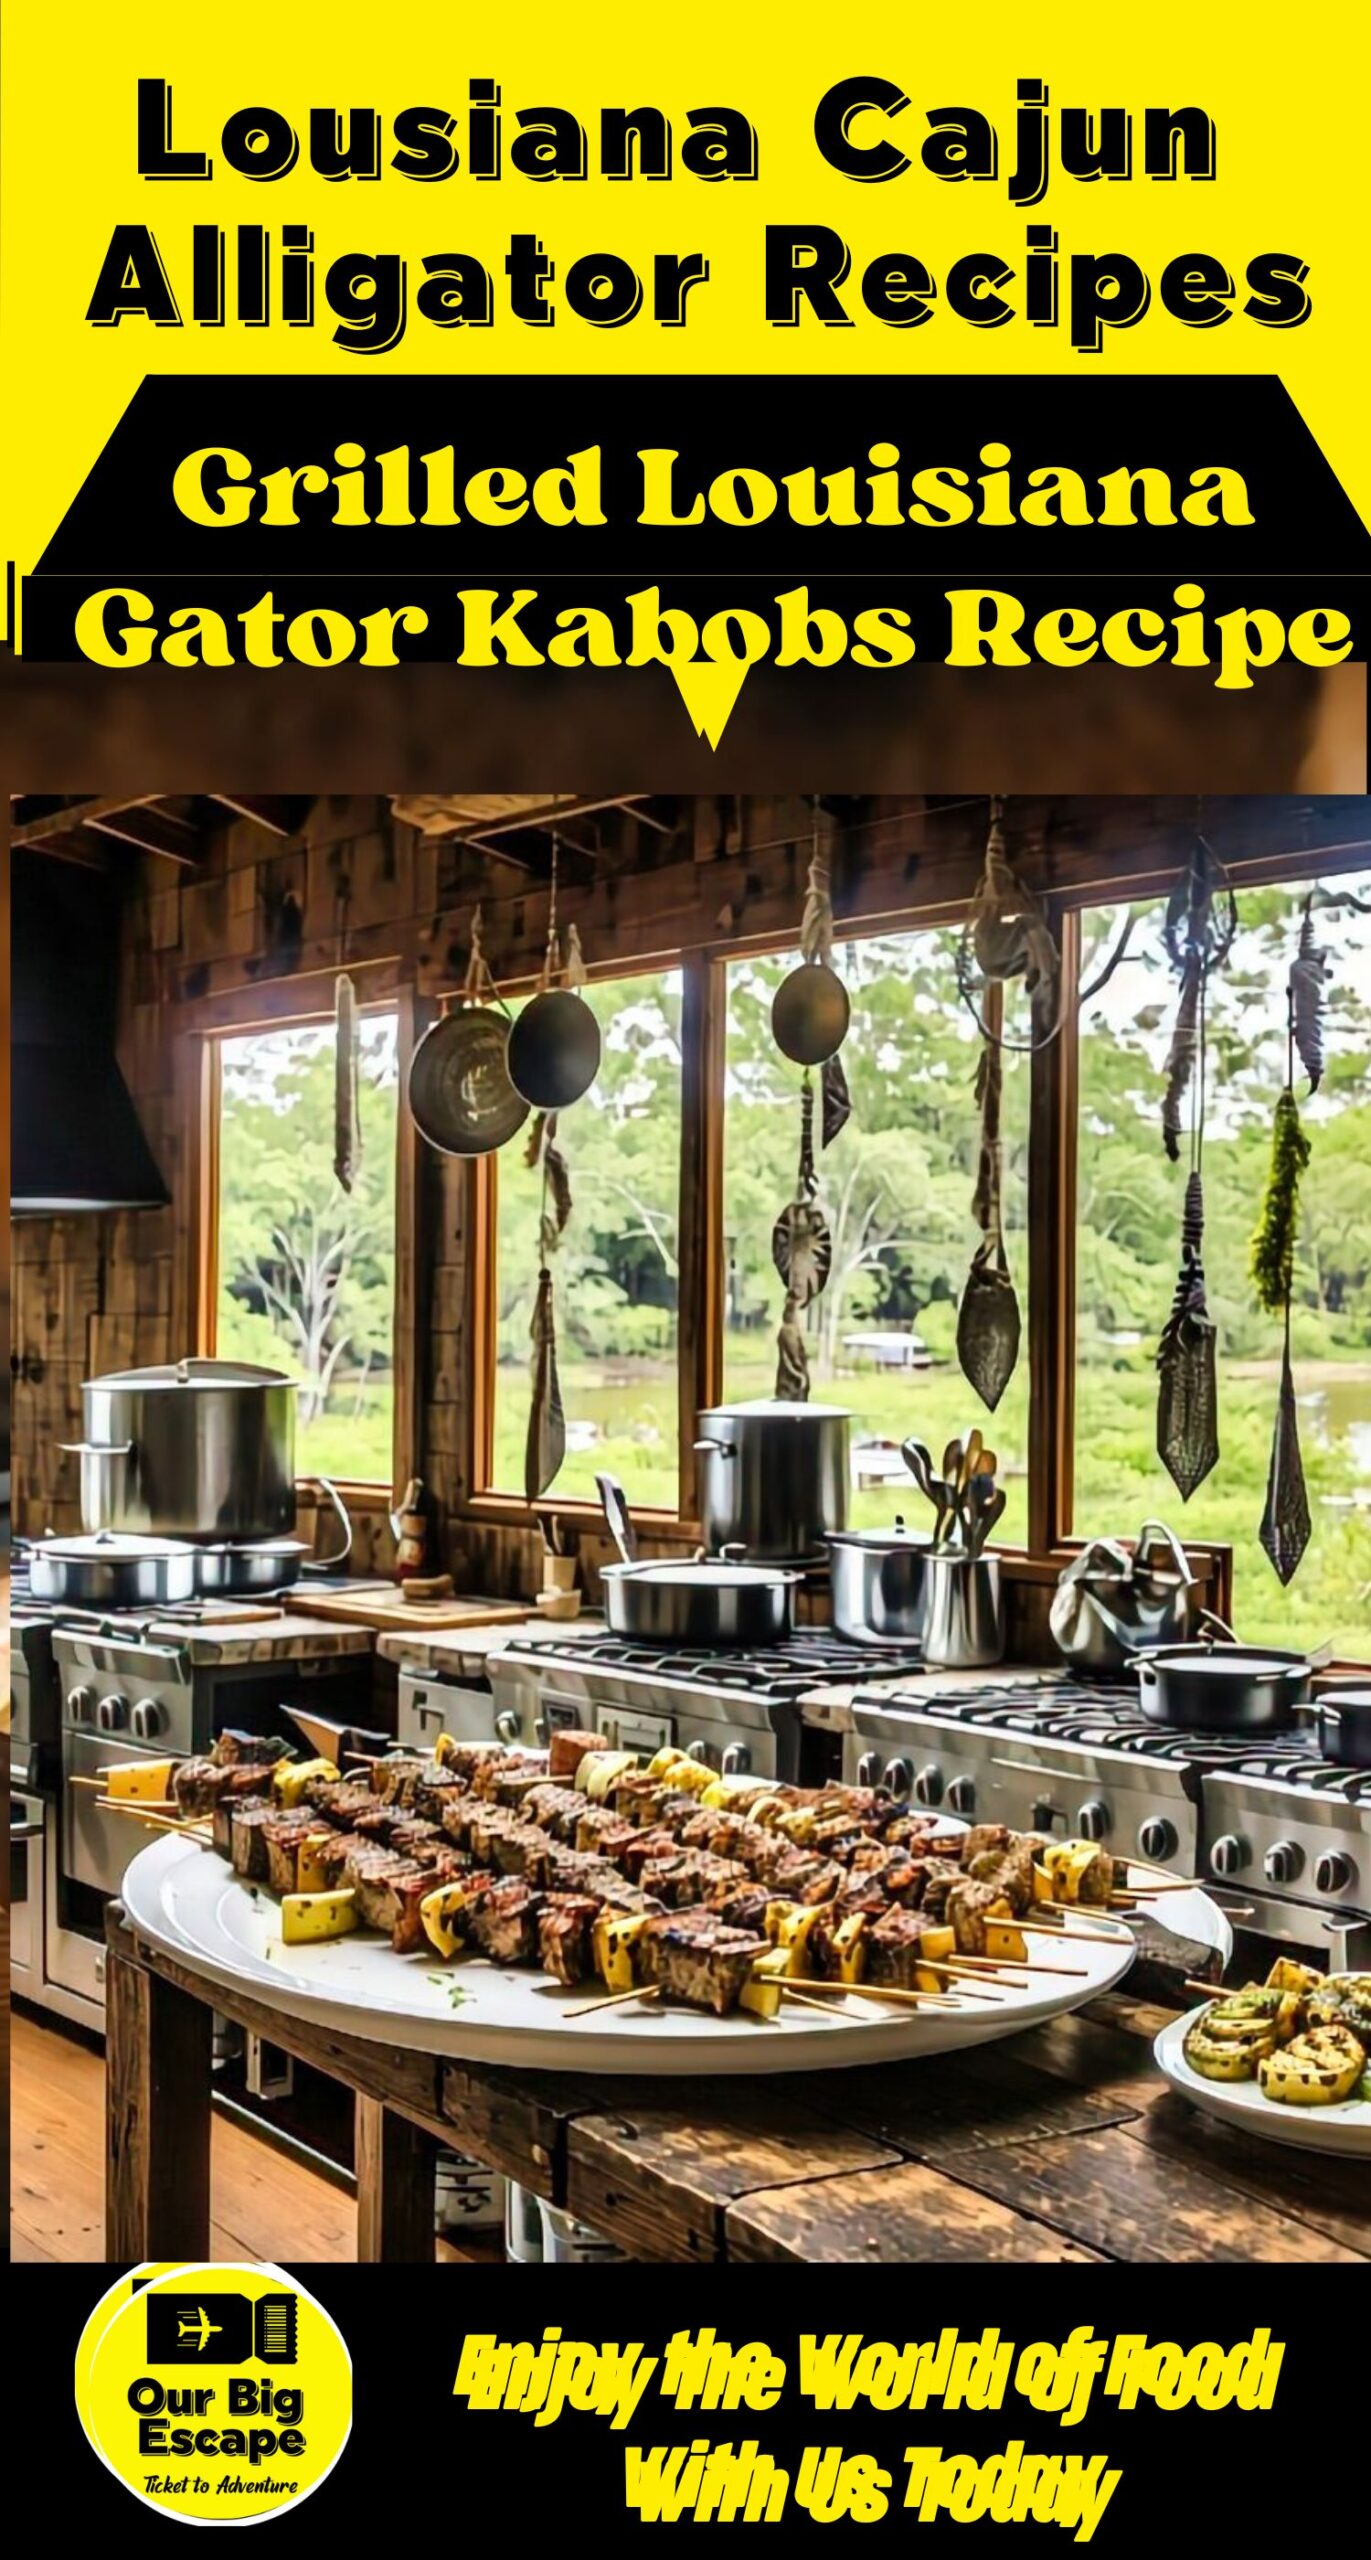 Grilled Louisiana Gator Kabobs Recipe